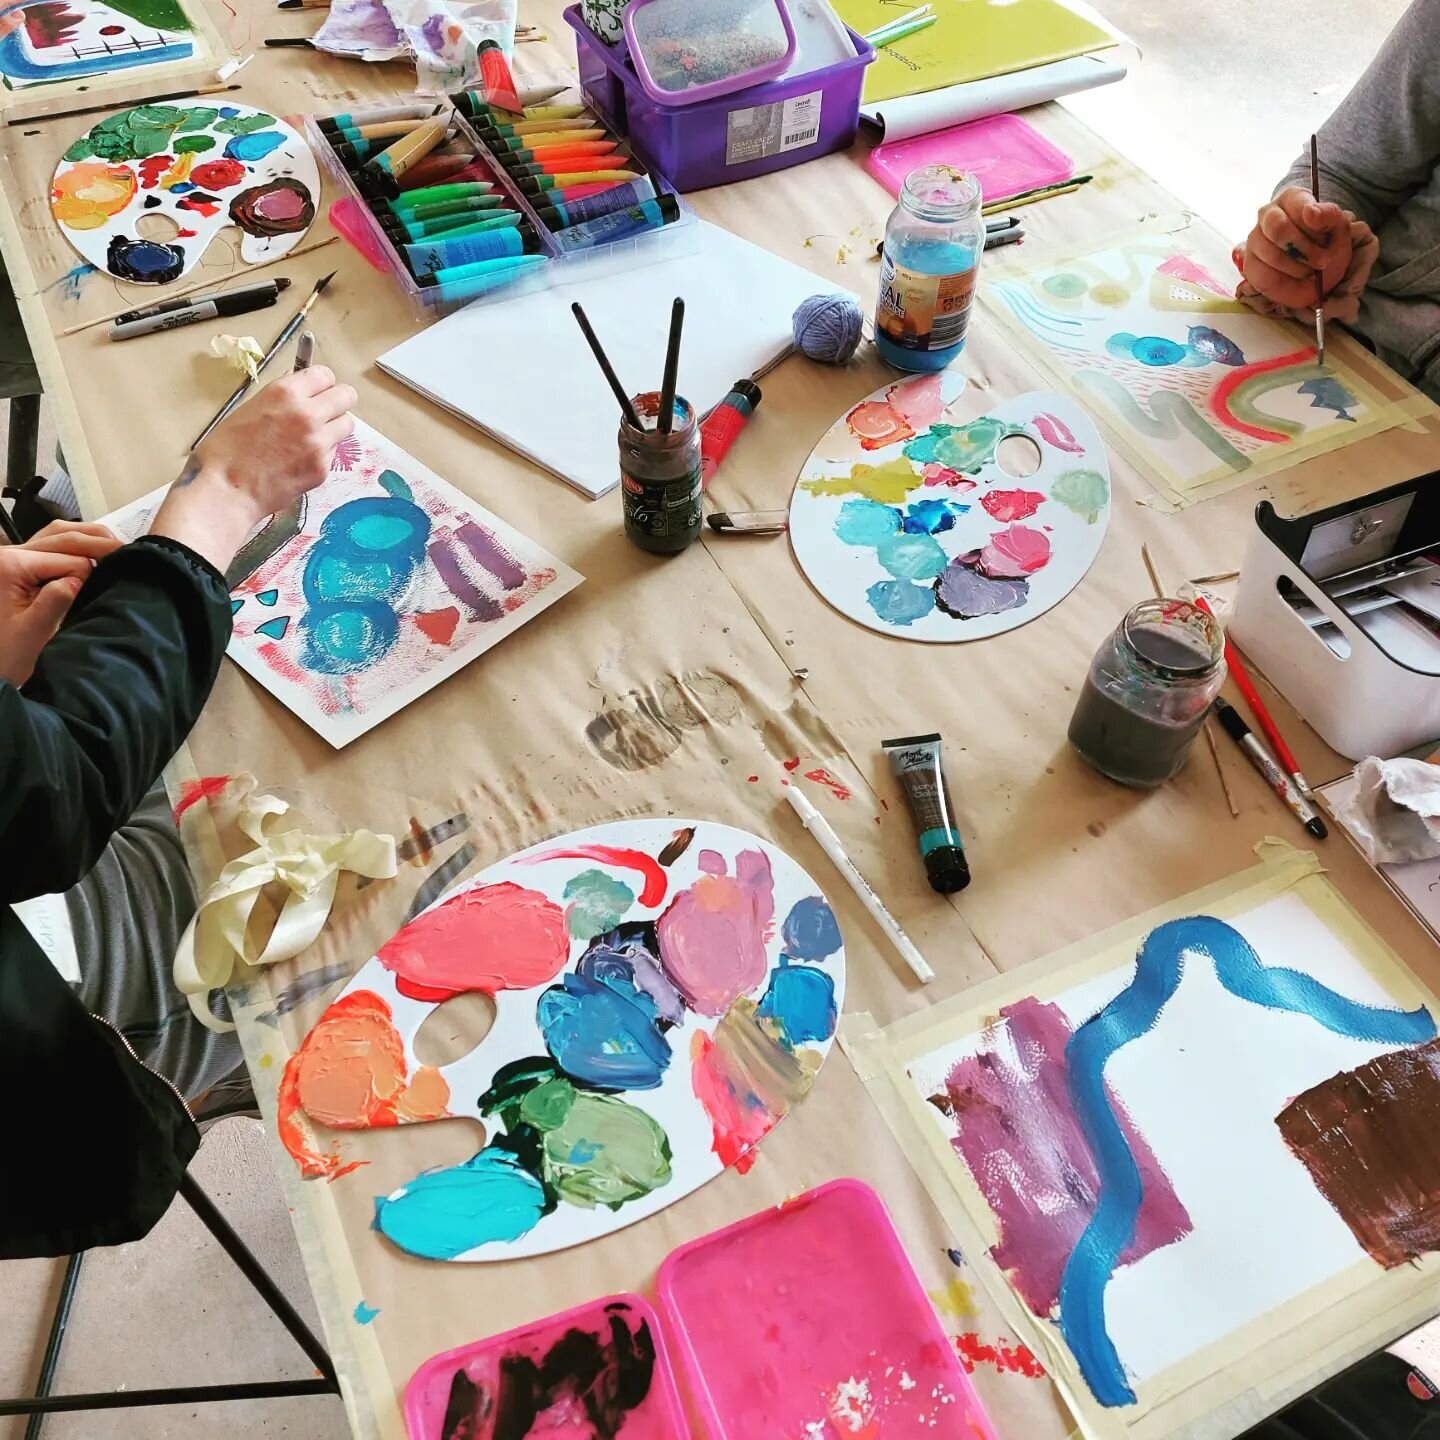 Exploring colour theory on a rainy day 🌧🌈

#colours #painting #kidartist #kidsartwork #kidsart #ccalfa #homeschooling #homeschoolingaustralia #unschooling #unschoolaustralia #sunshinecoastartists #sunshinecoastlearning #sunshinecoasthomeschool #sun